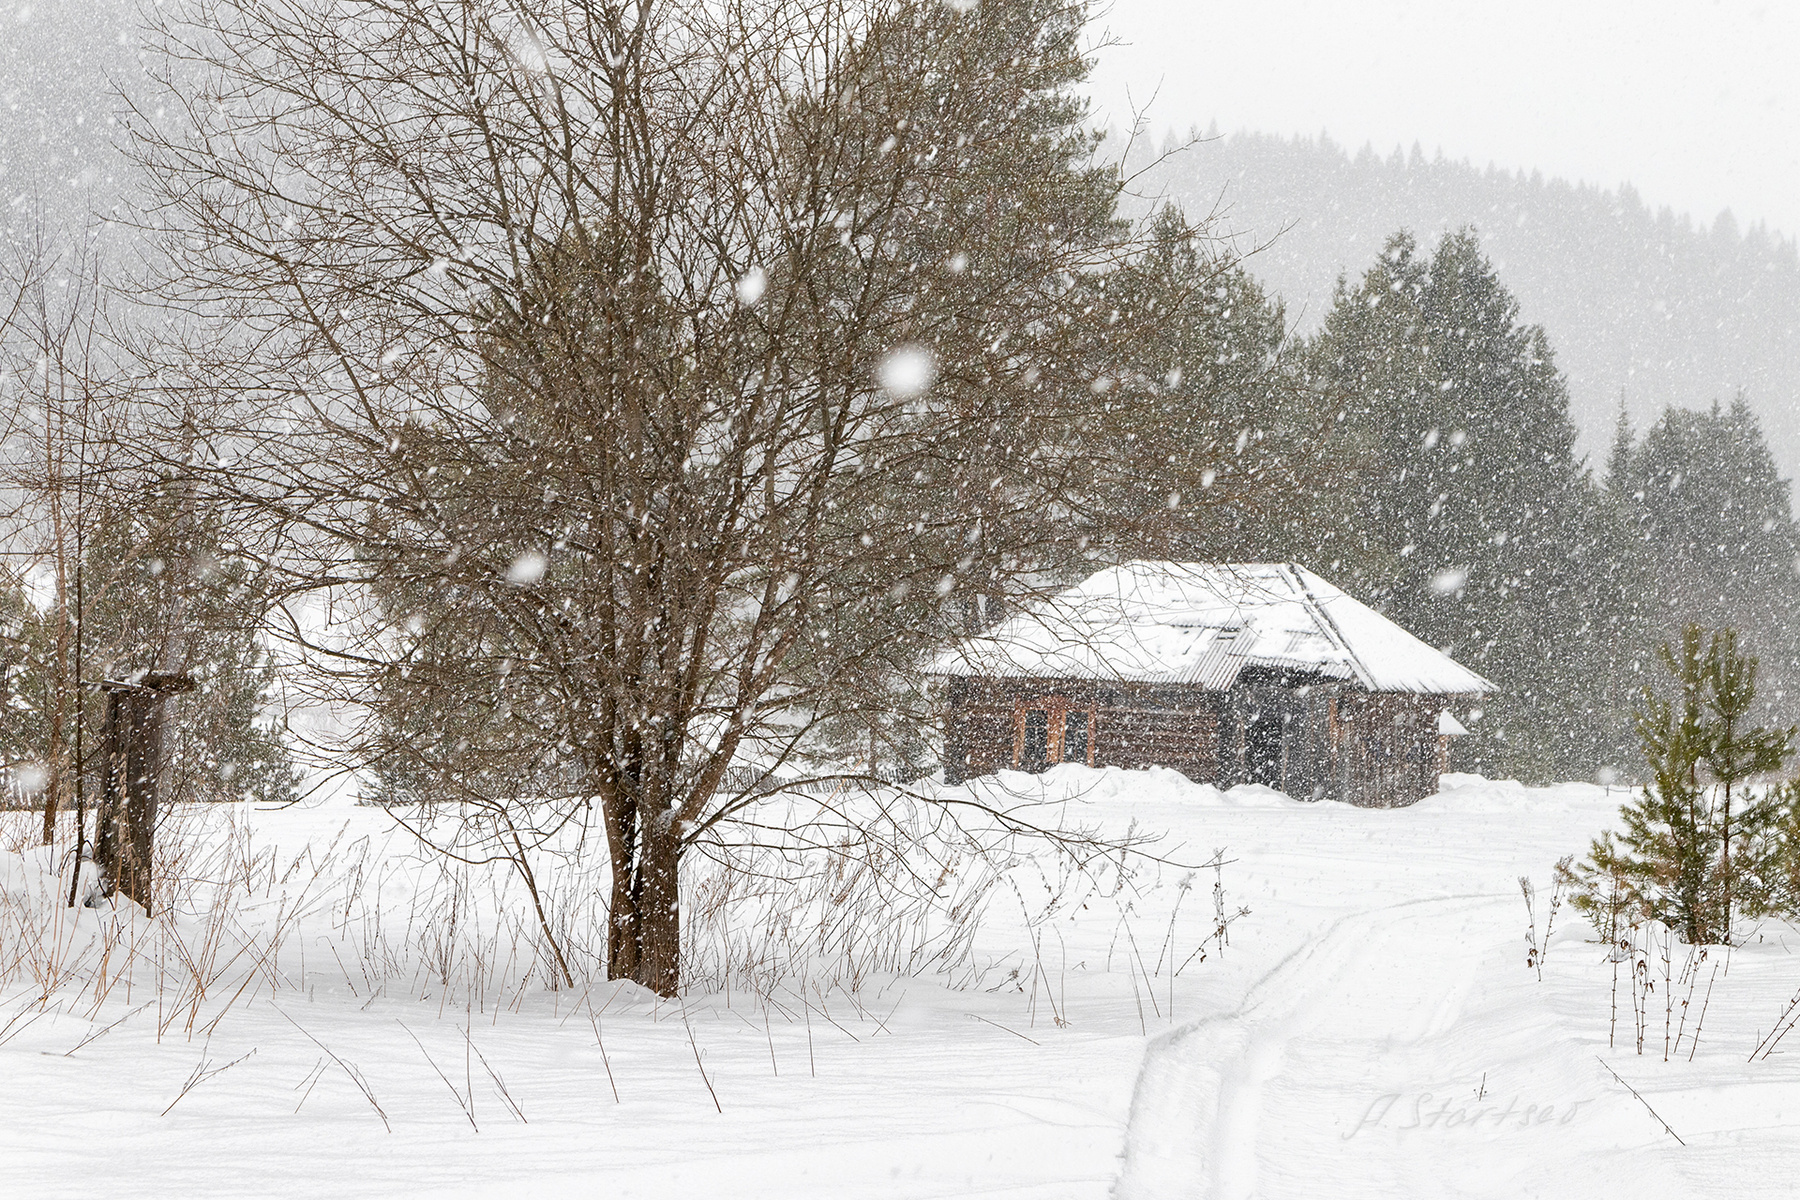 Снегопад зима снег дерево пейзаж природа туризм Пермский_край Урал Кын погода